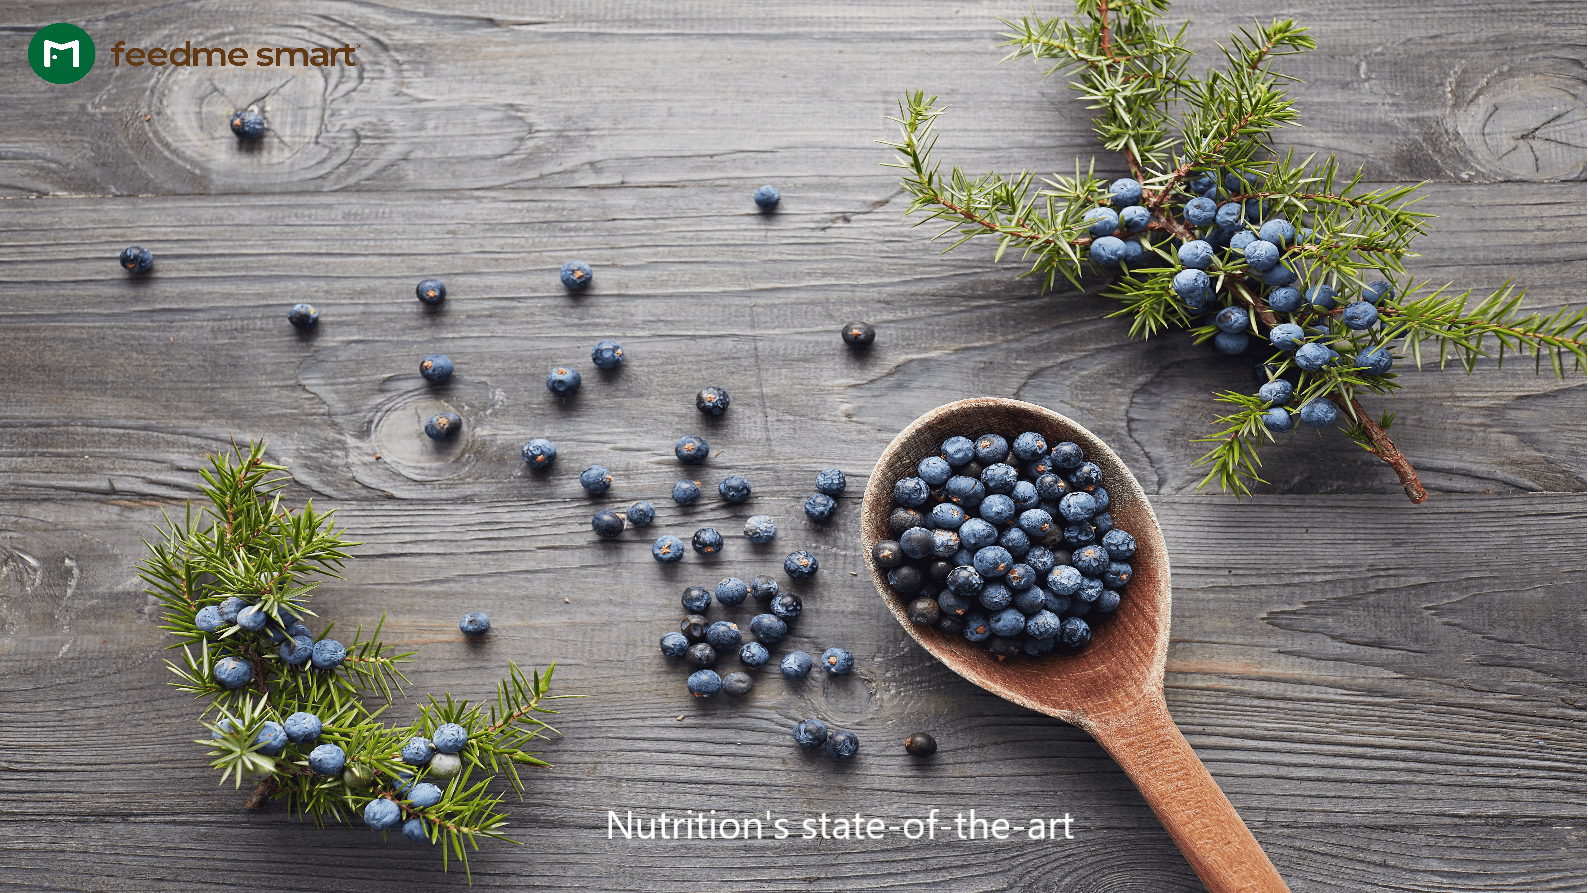 Juniper Berries Benefits For Blood Sugar and More